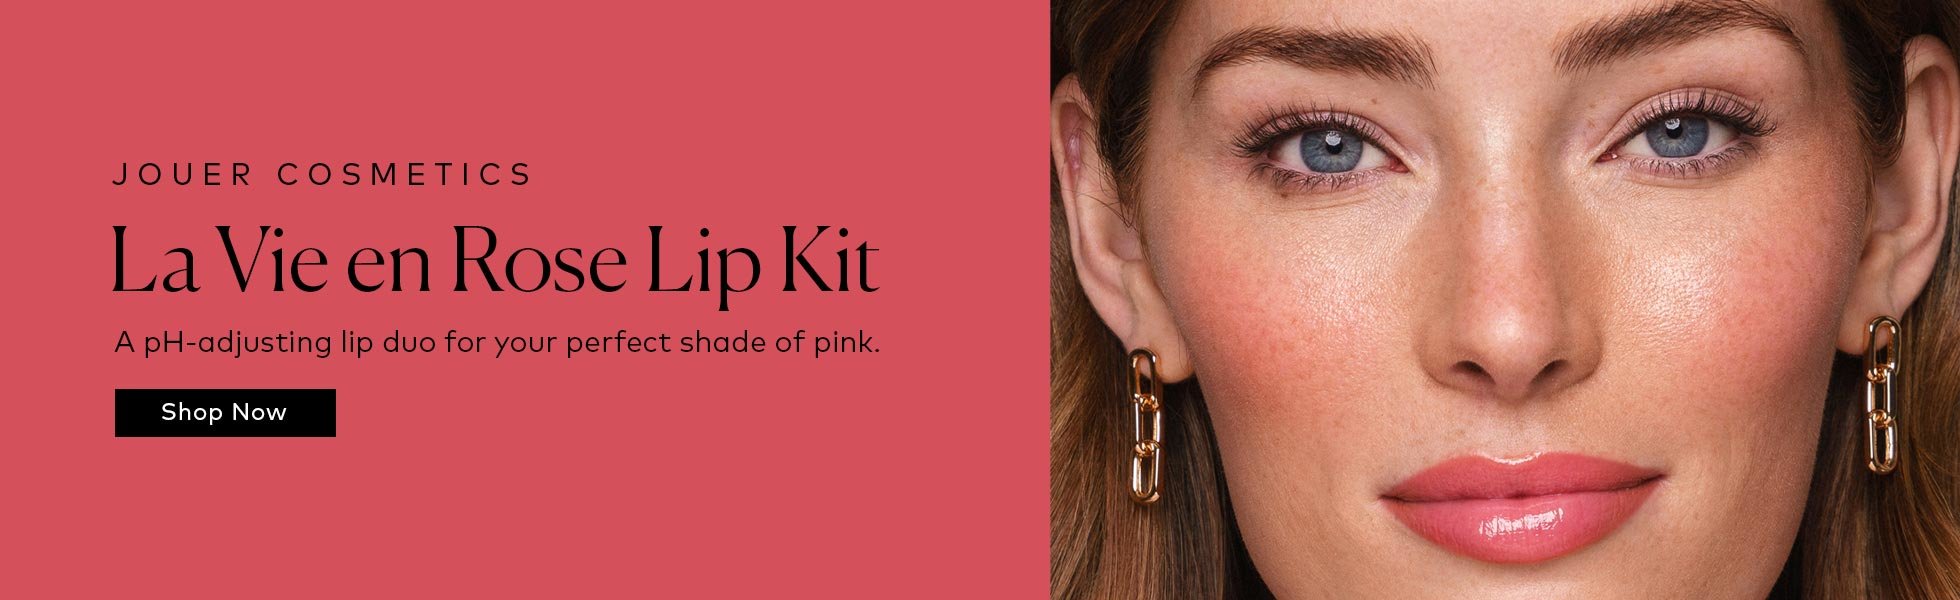 Shop the Jouer Cosmetics La Vie En Rose Lip Kit pH Lip Duo at Beautylish.com